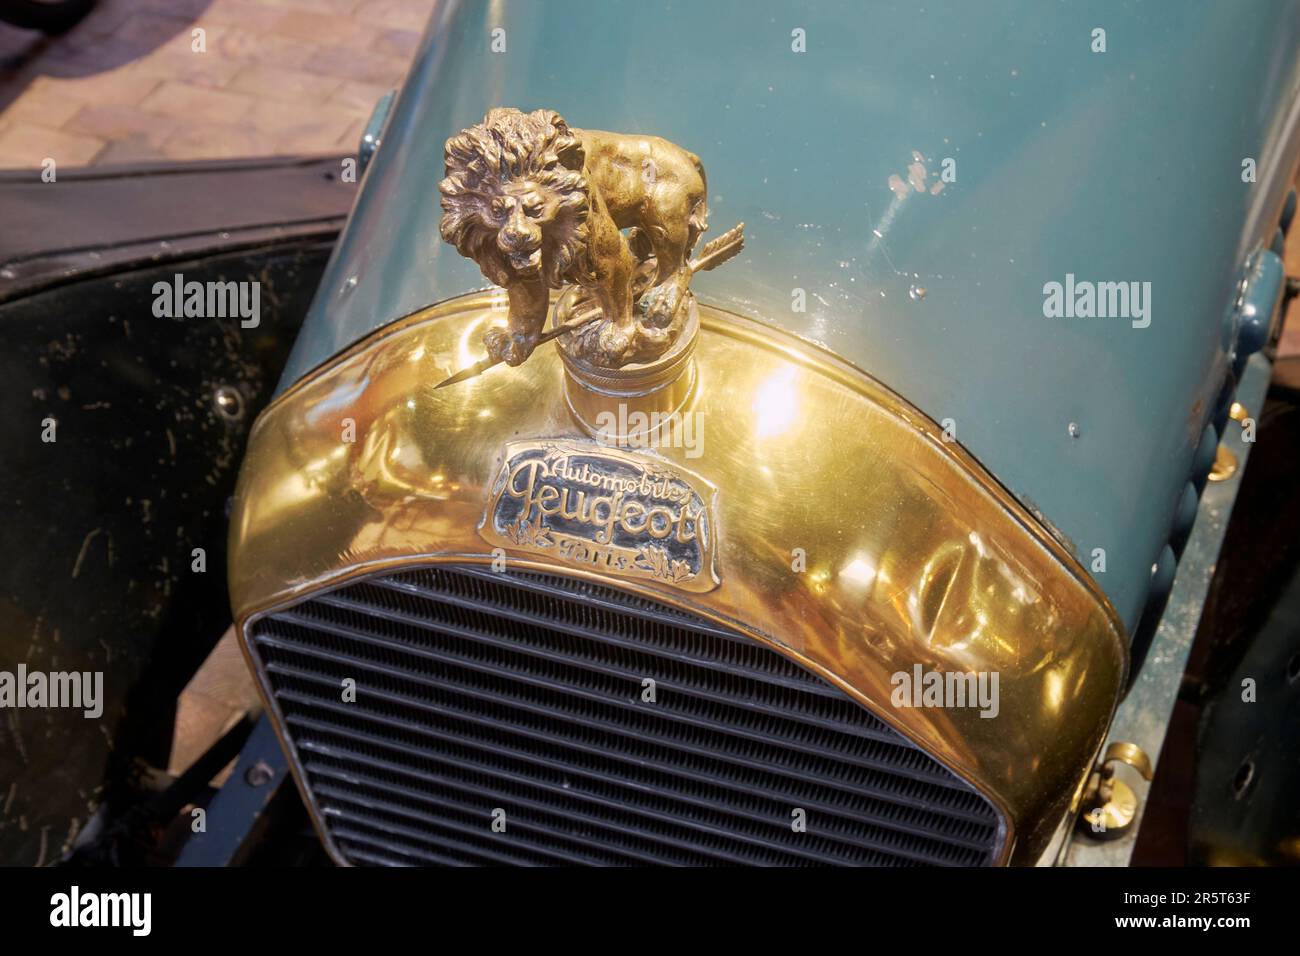 https://c8.alamy.com/compde/2r5t63f/frankreich-doubs-montbeliard-sochaux-das-abenteuermuseum-peugeot-lowenstecker-ein-standard-181-br-1925-roadster-autoheizer-2r5t63f.jpg